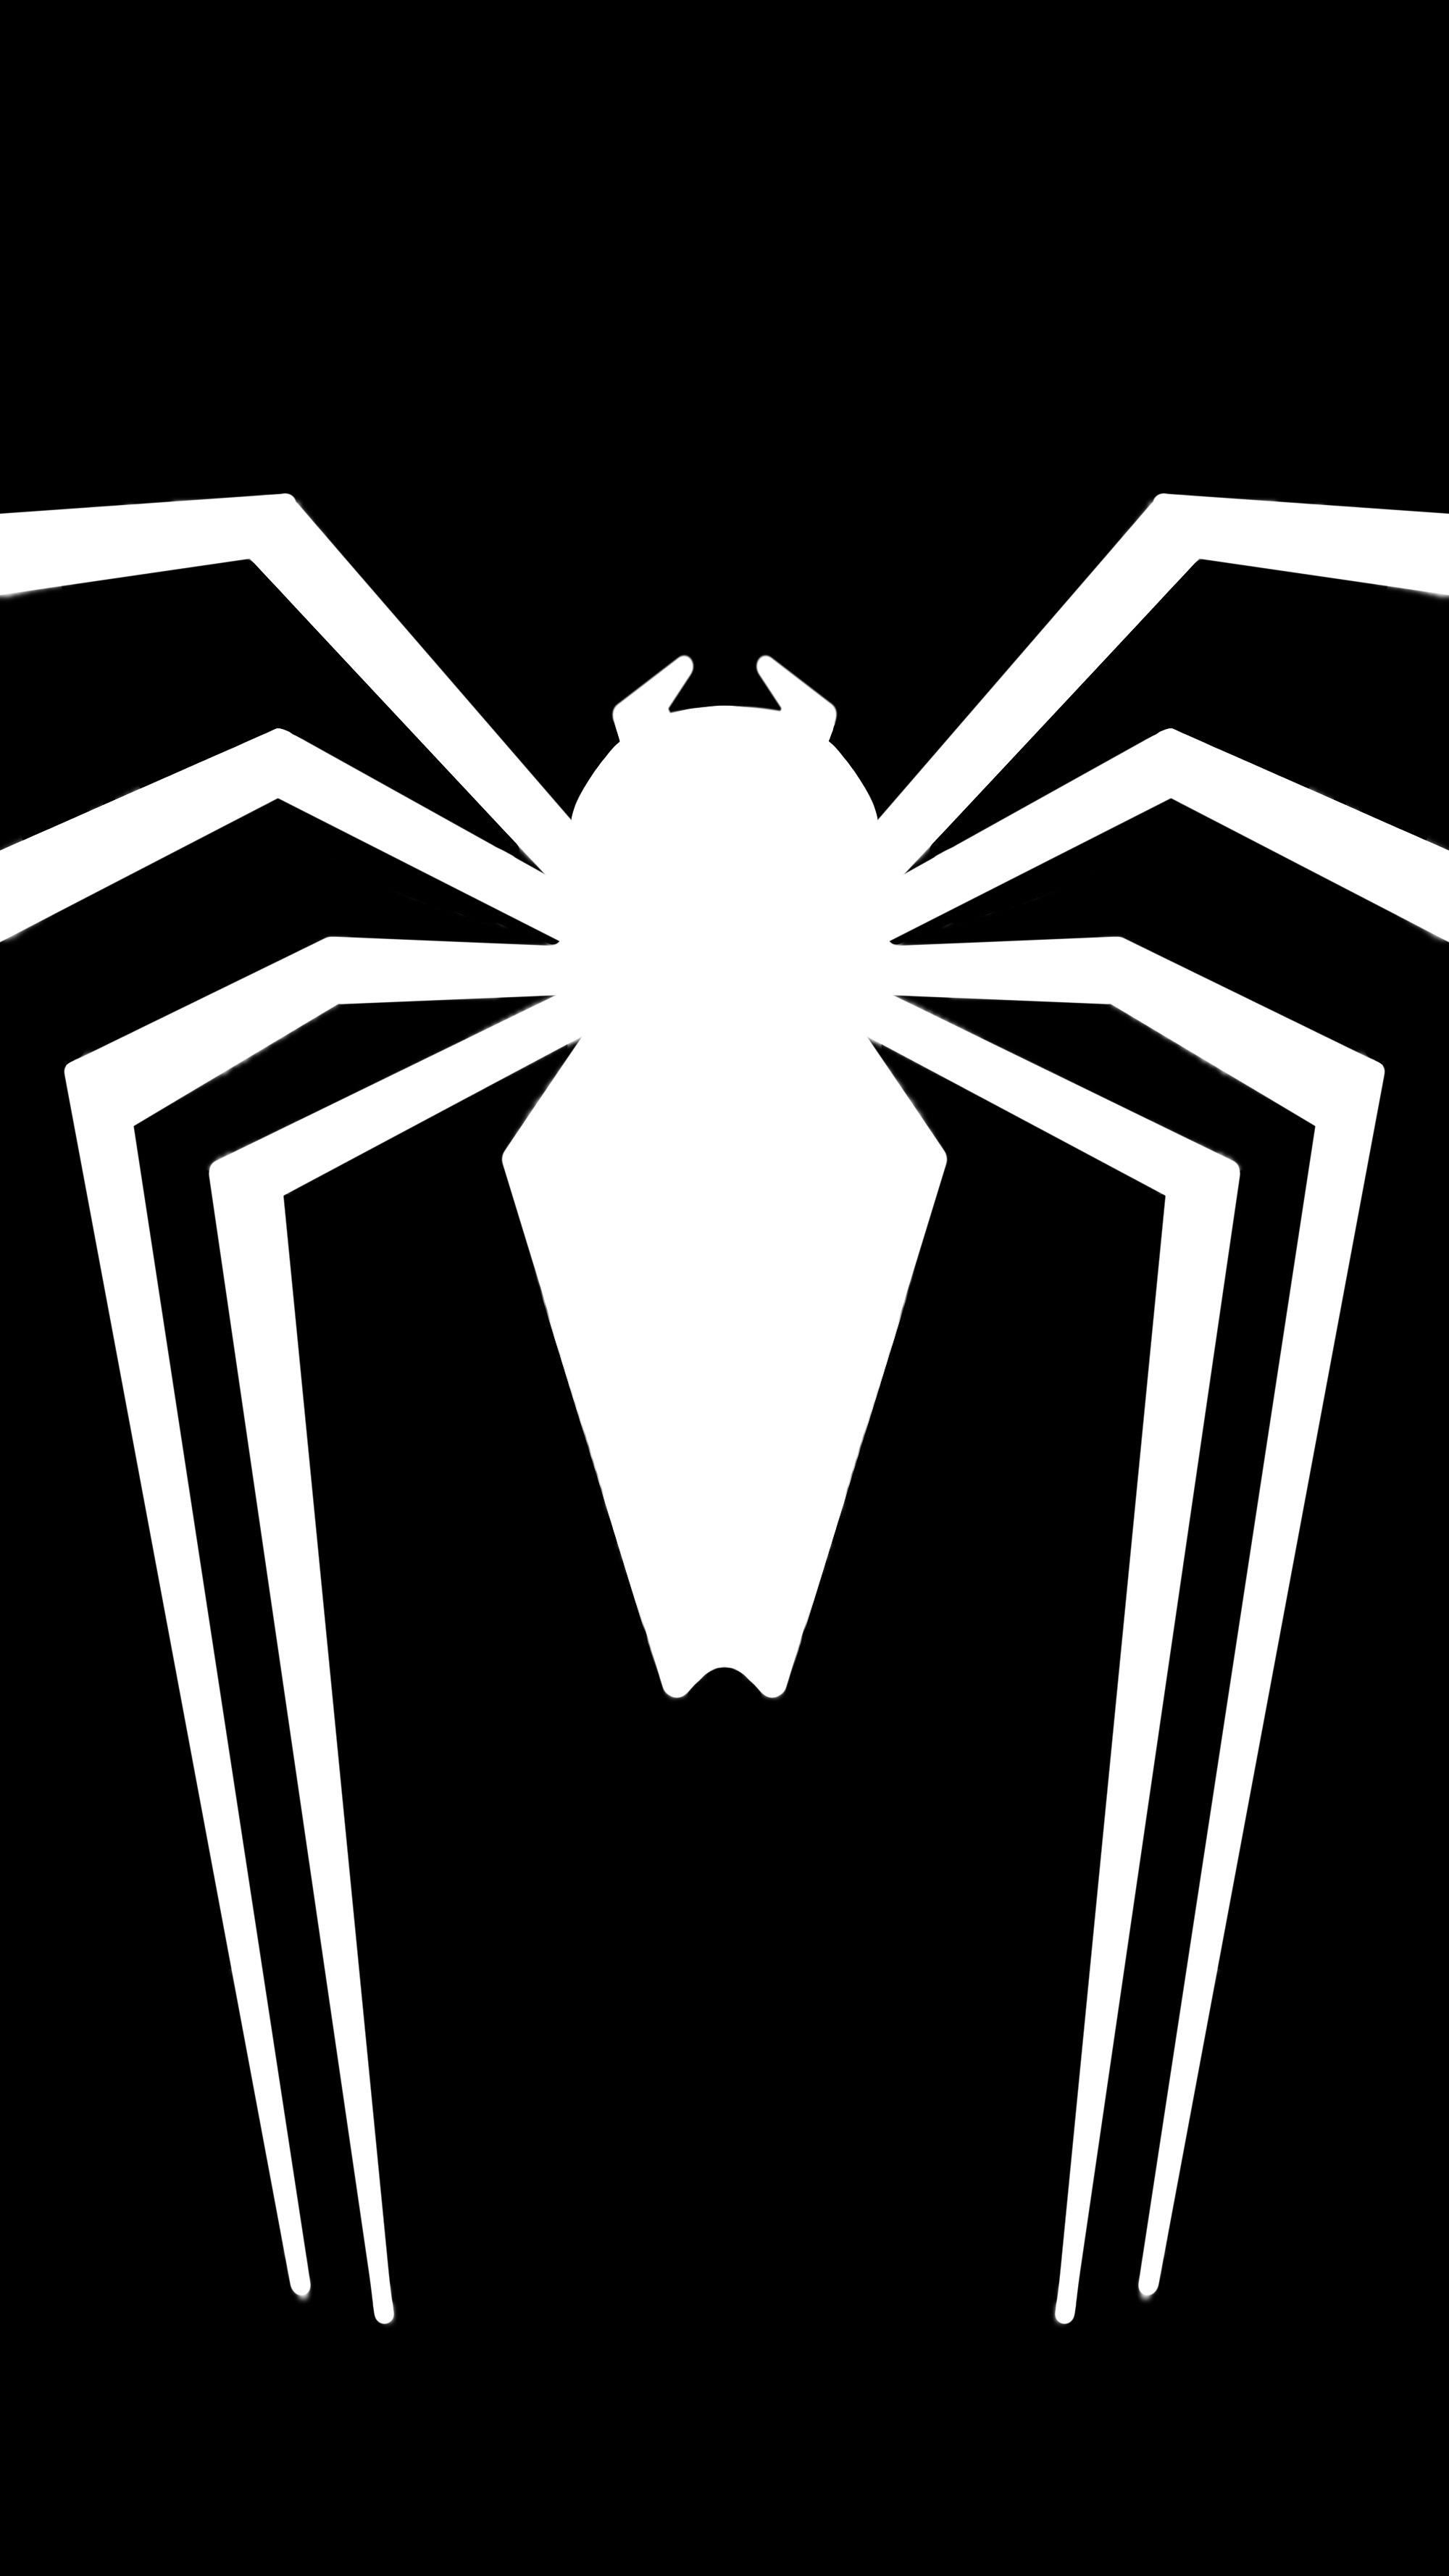 Spider Man Ps4 Symbol Wallpapers Wallpaper Cave